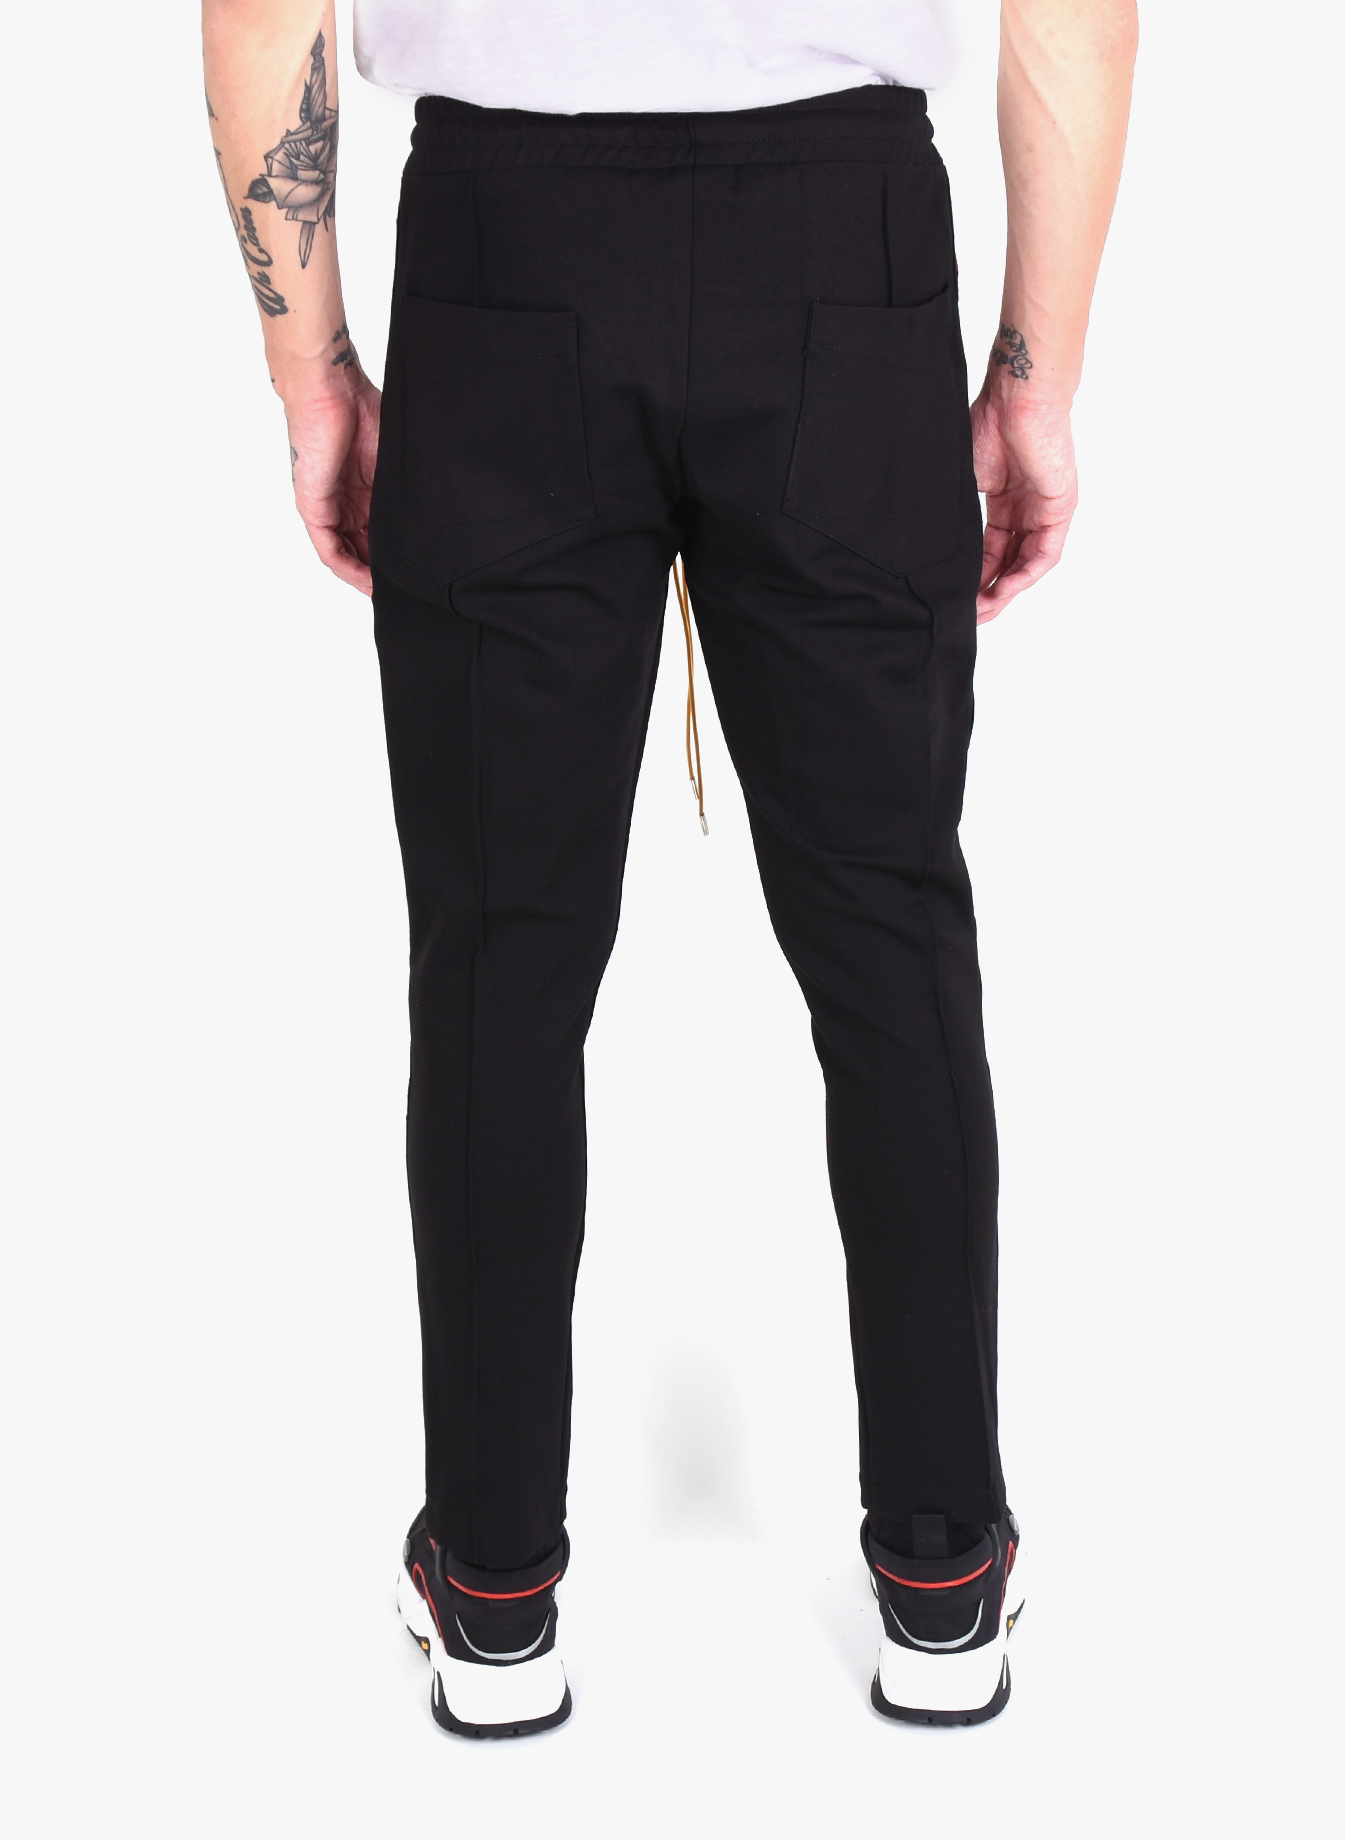 Rhude 'Traxedo' Pants Black/Red FW19 - Mensquare